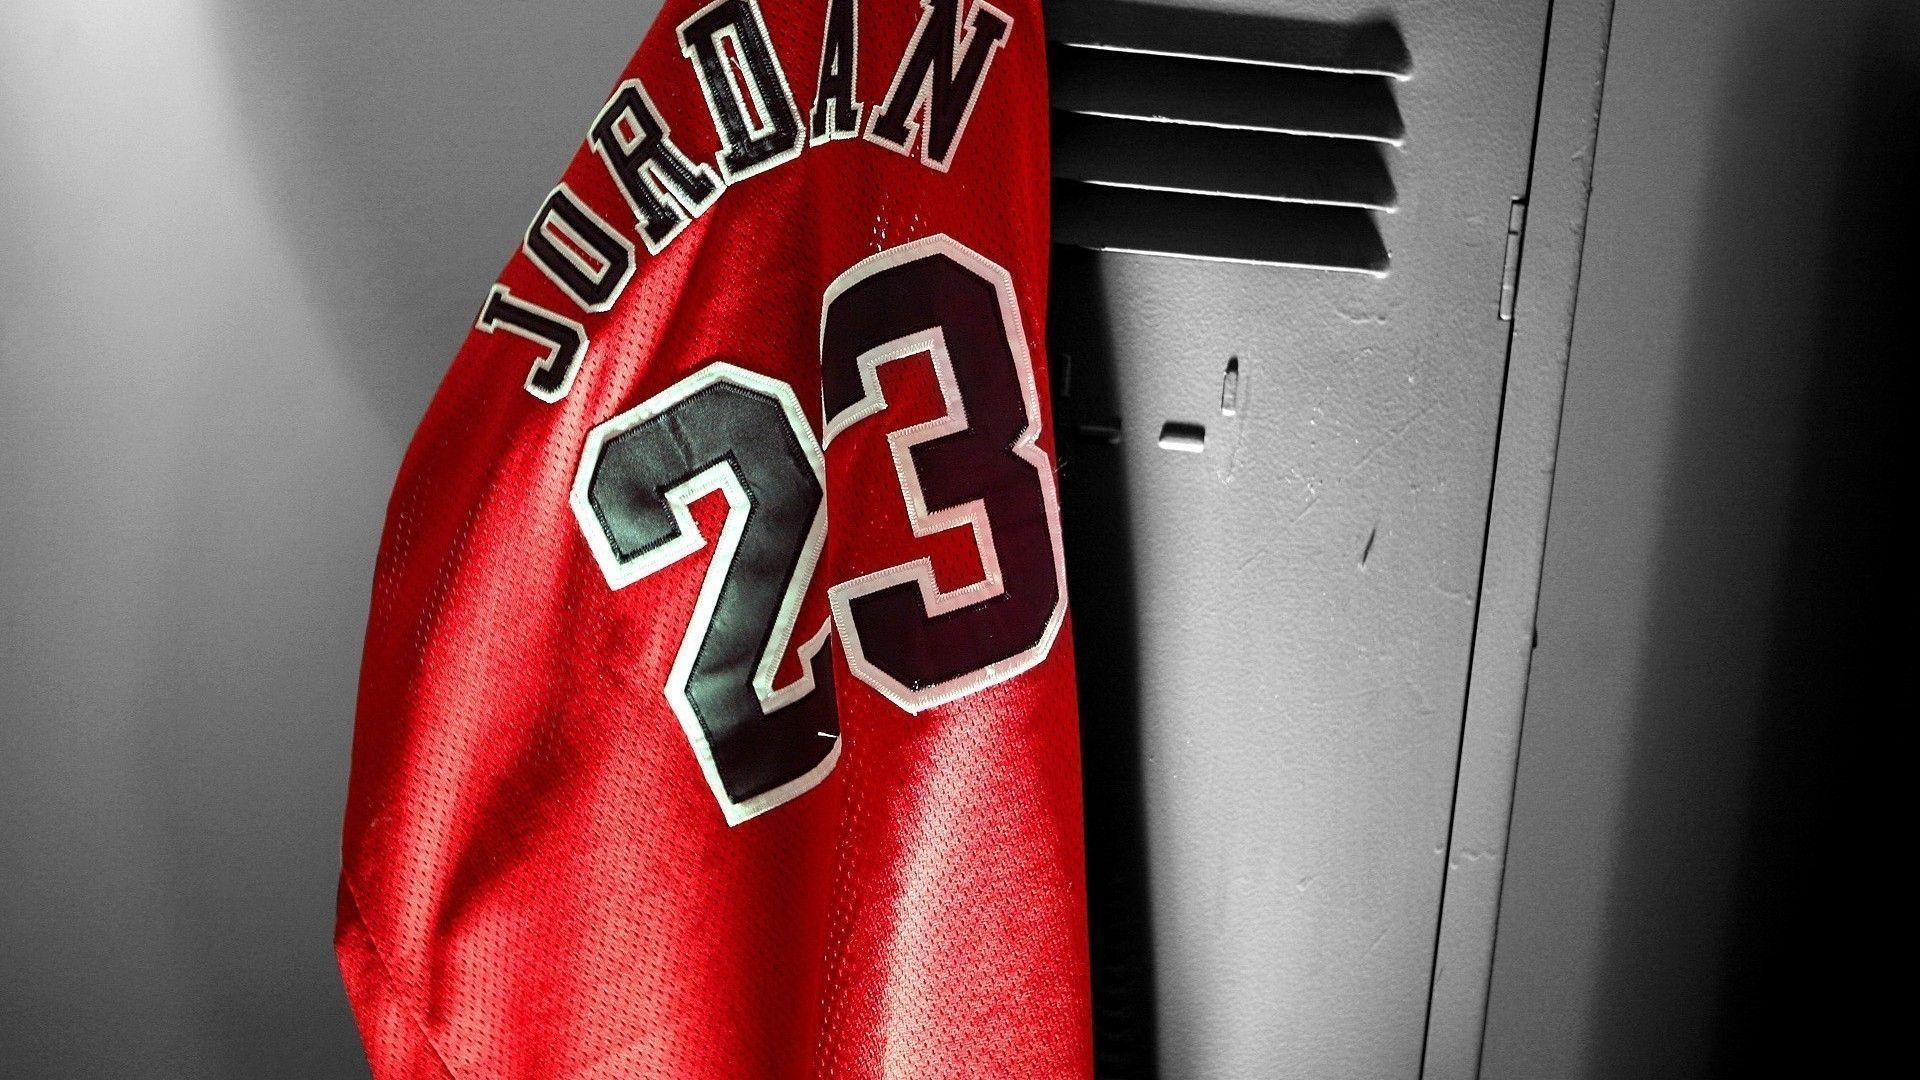 Michael Jordan Jersey